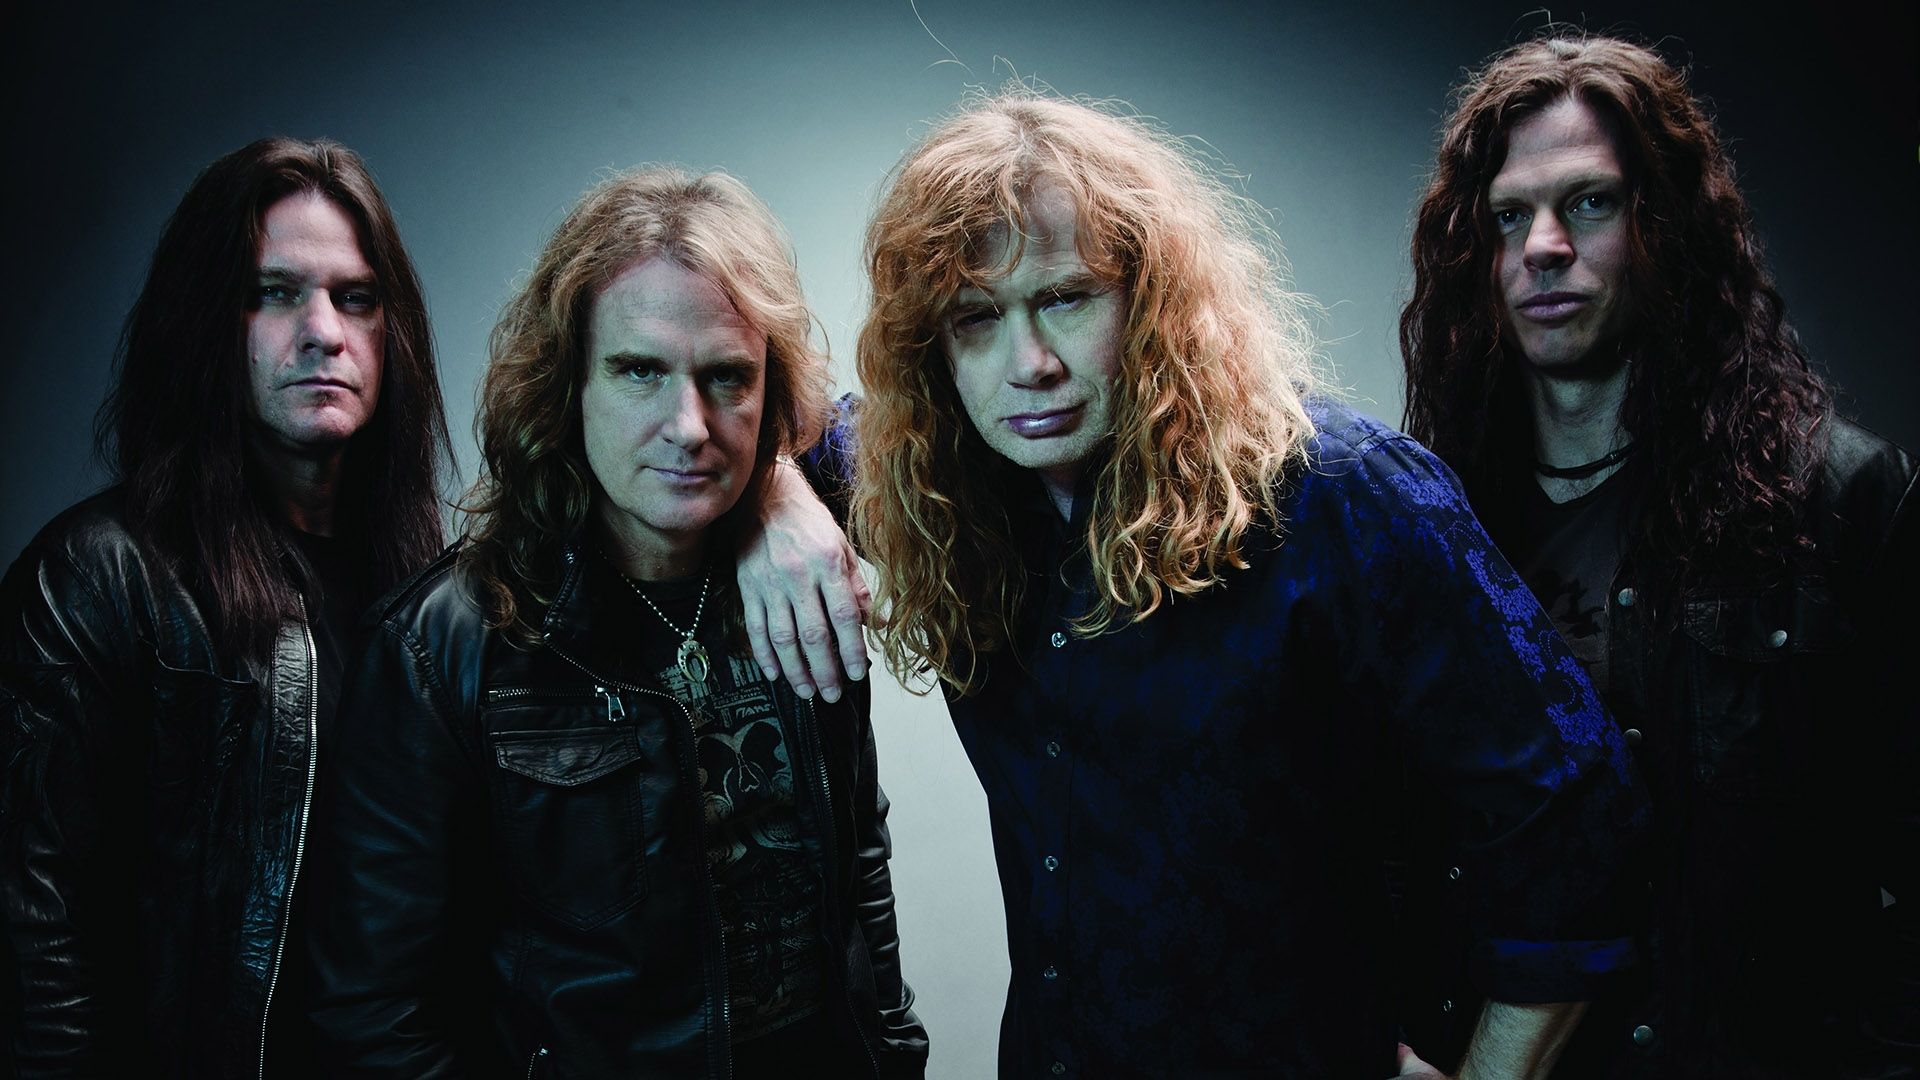 Download Wallpaper 1920x1080 Megadeth, Band, Hair, Look, Jackets